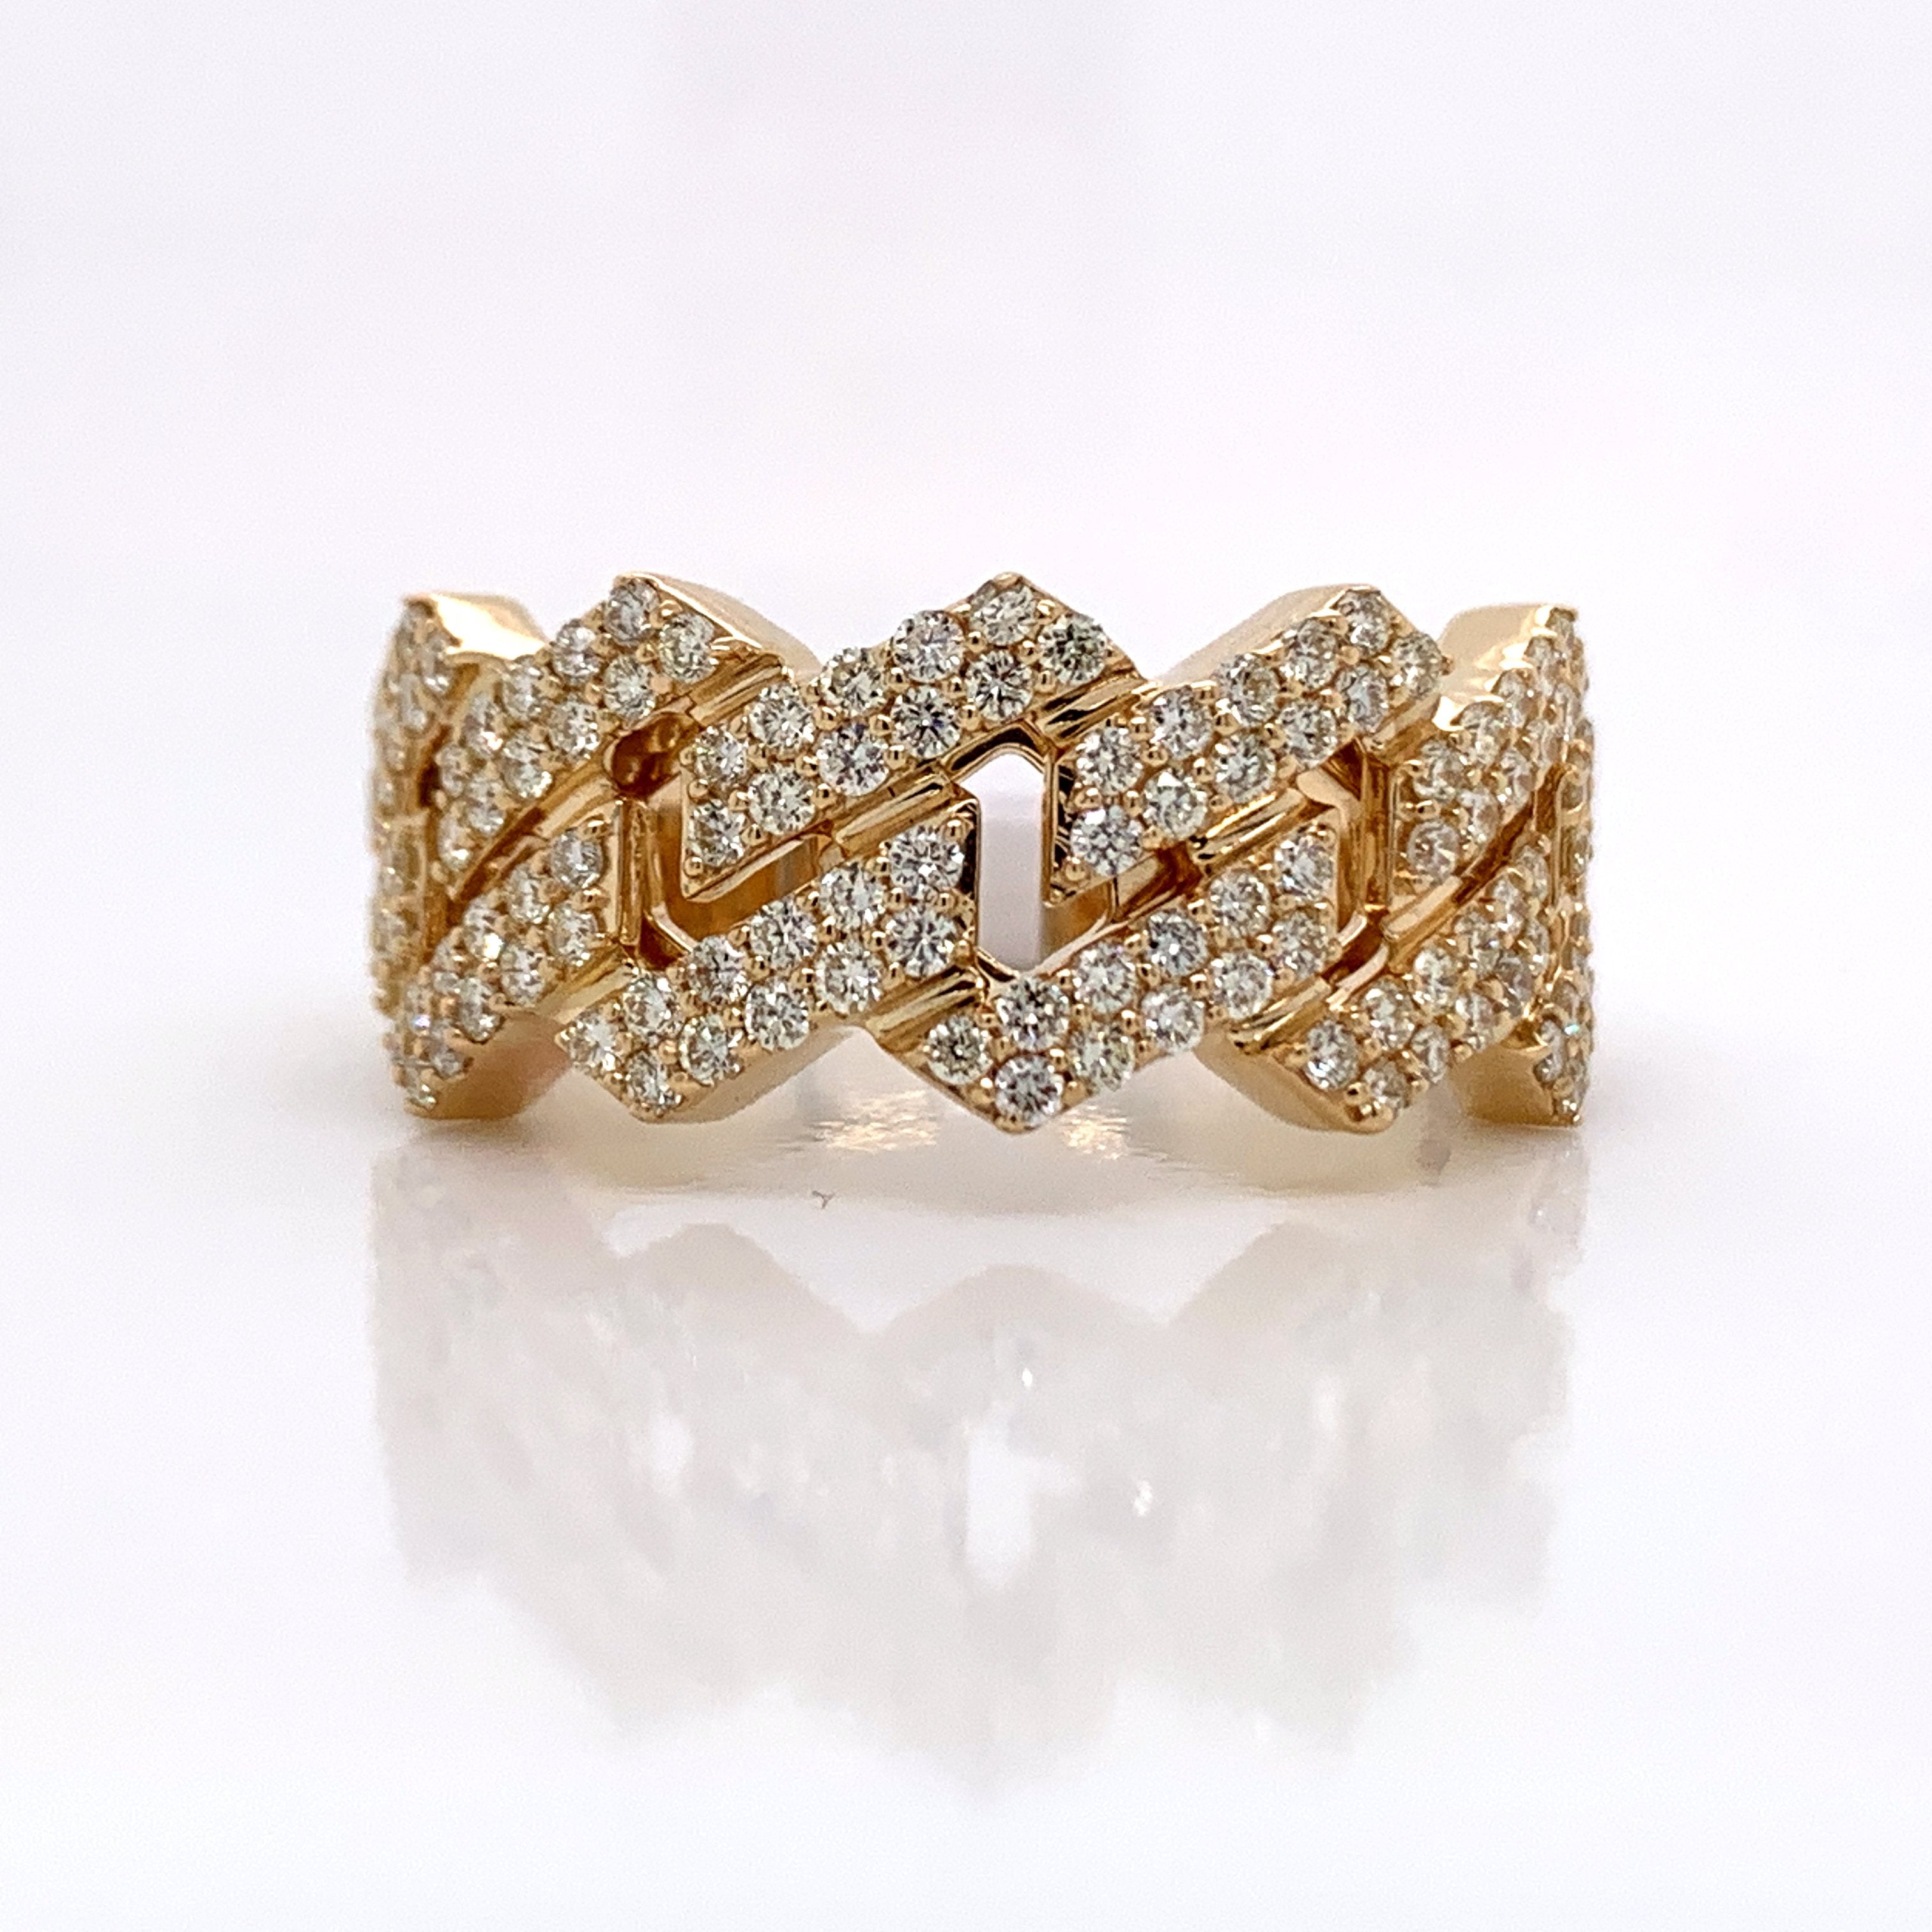 1.25 CT. Diamond Ring in 14K Gold - White Carat Diamonds 